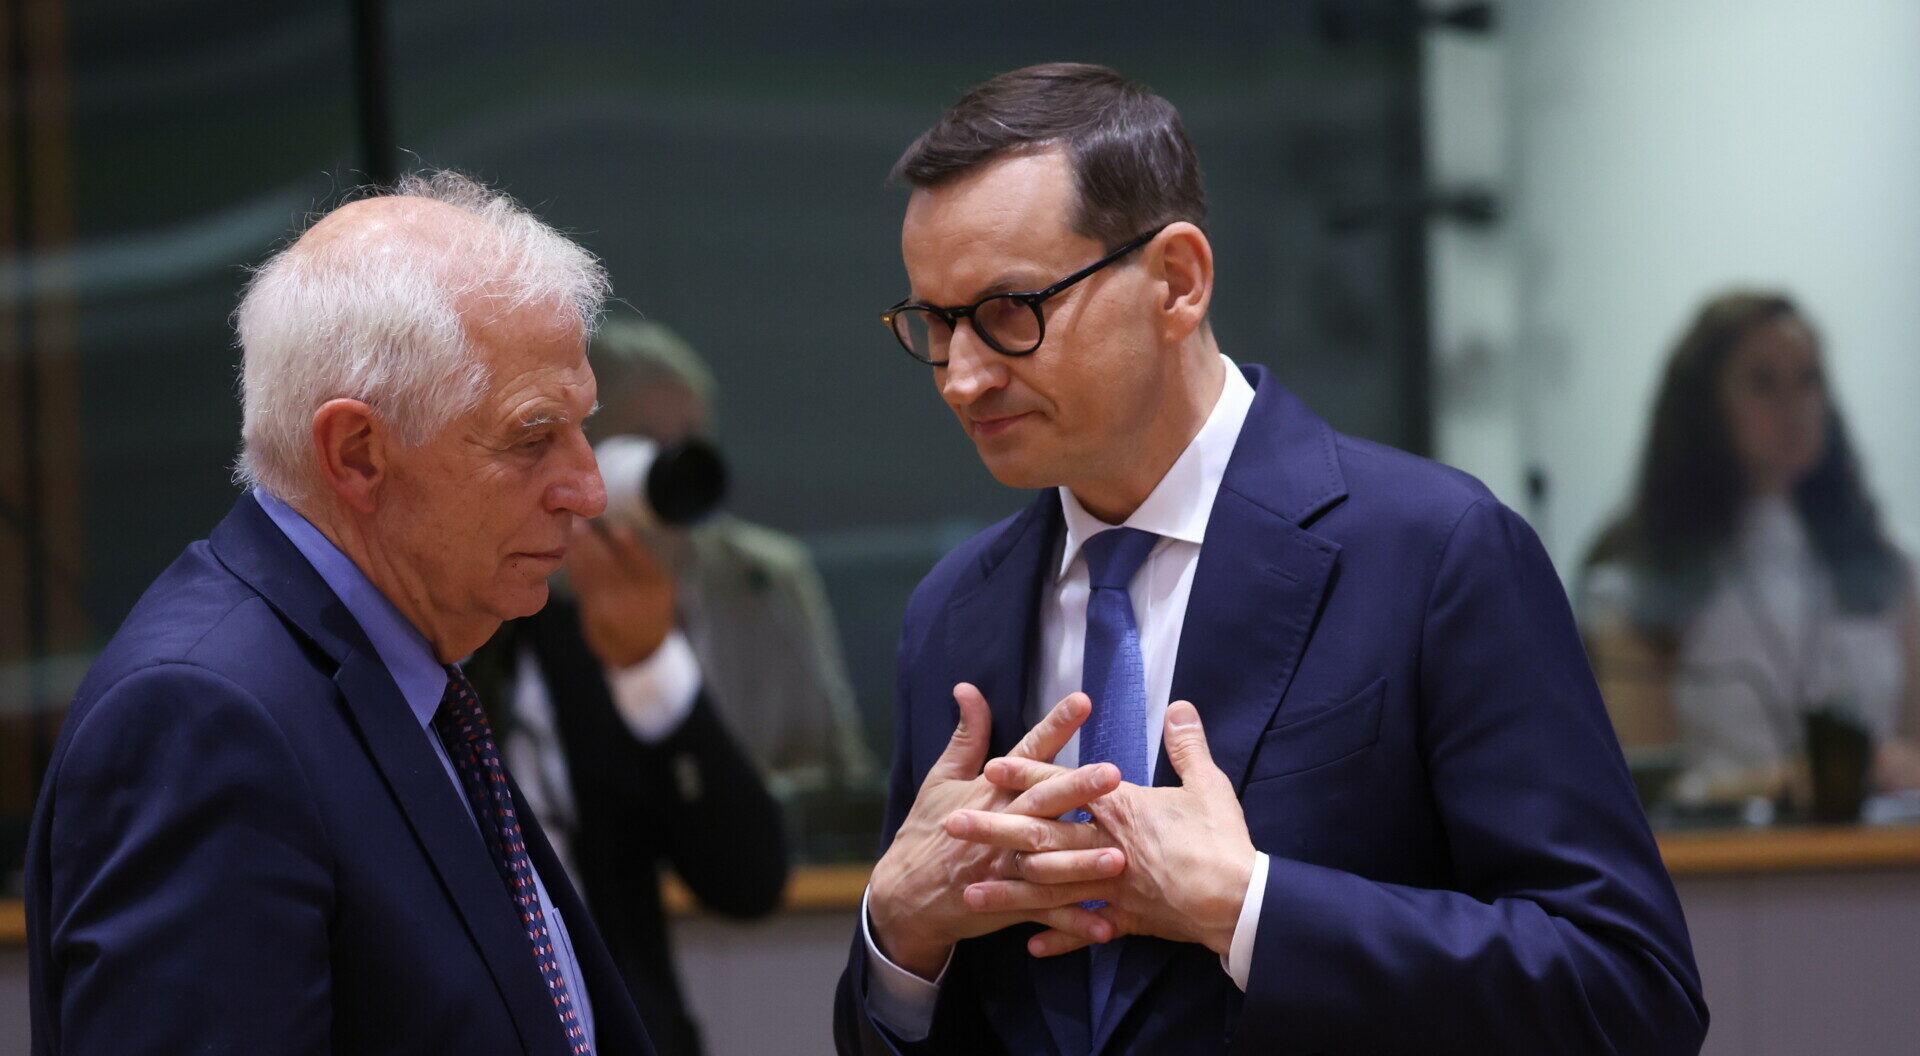 O Ύπατος Εκπρόσωπος της ΕΕ για τις Εξωτερικές Υποθέσεις Ζοζέπ Μπορέλ και ο Πολωνός πρωθυπουργός Ματέους Μοραβιέτσκι στη Σύνοδο Κορυφής της ΕΕ © EPA/OLIVIER HOSLEΤ